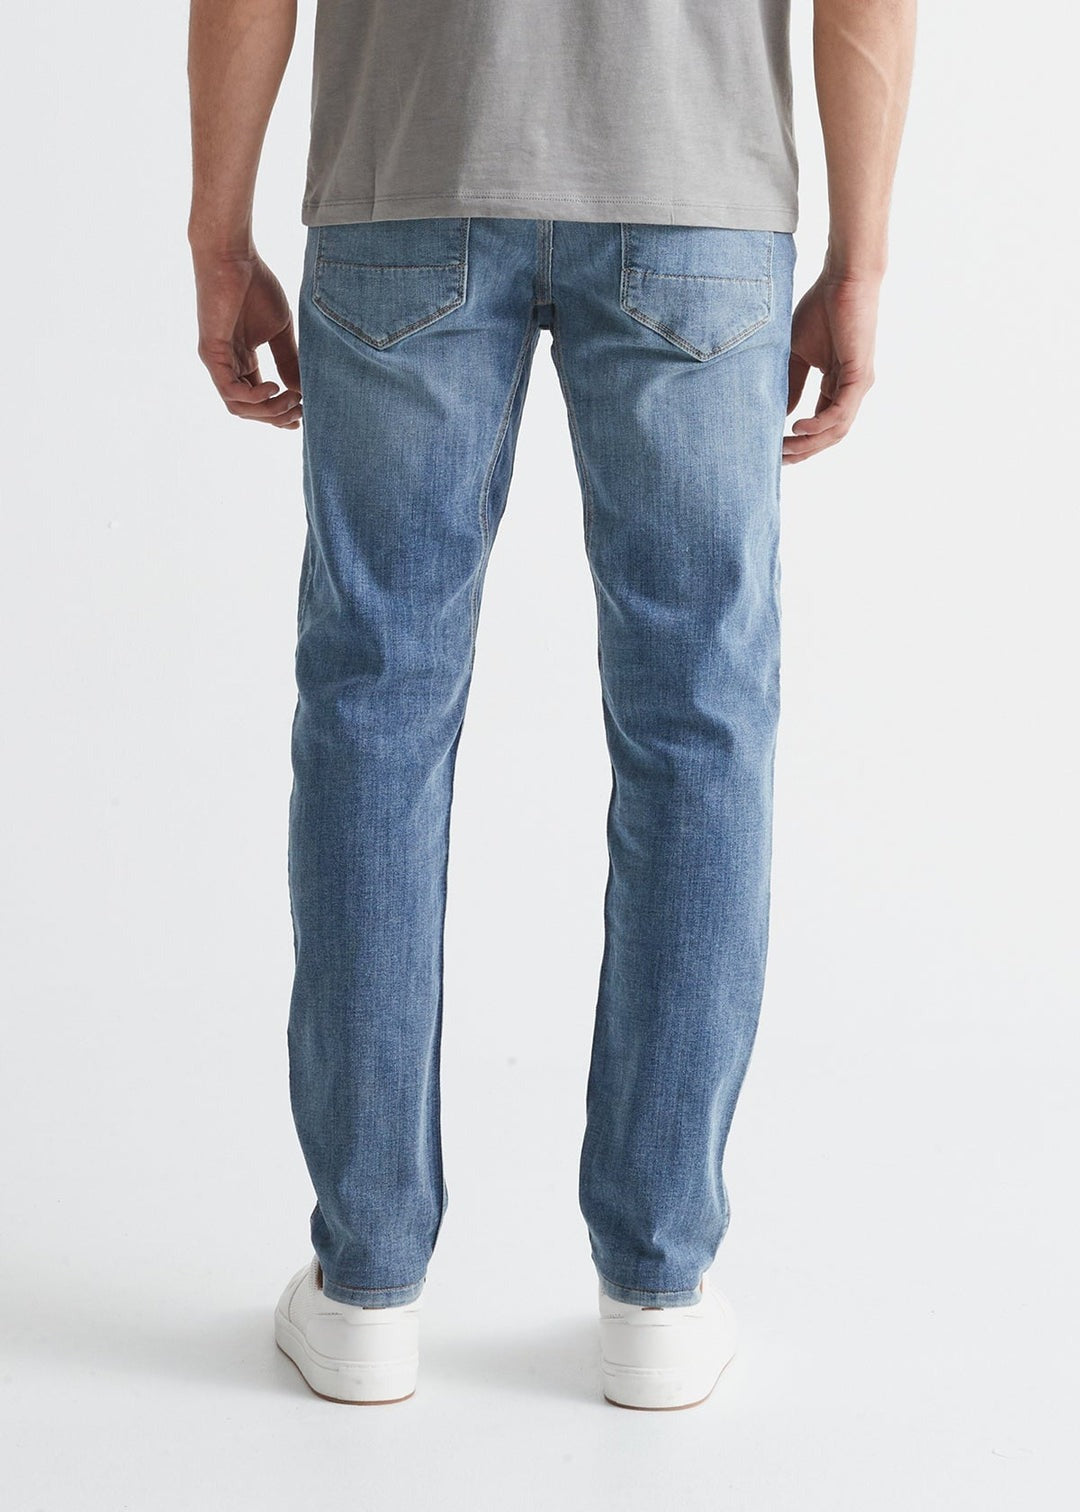 Duer Performance Slim Tidal Jeans